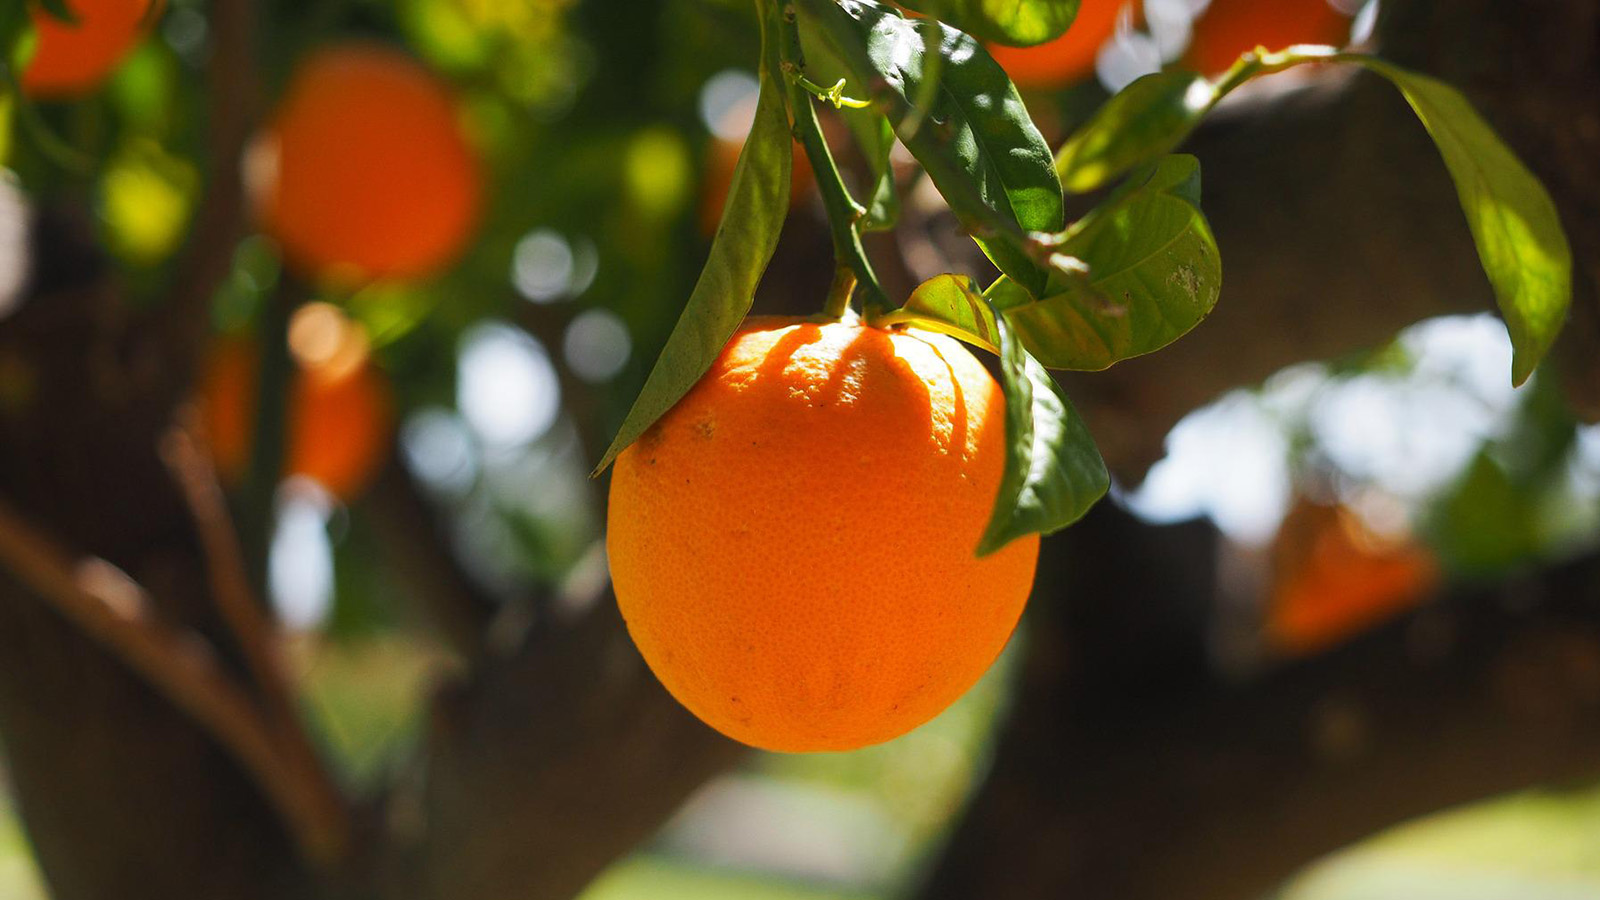 Oranges on a tree